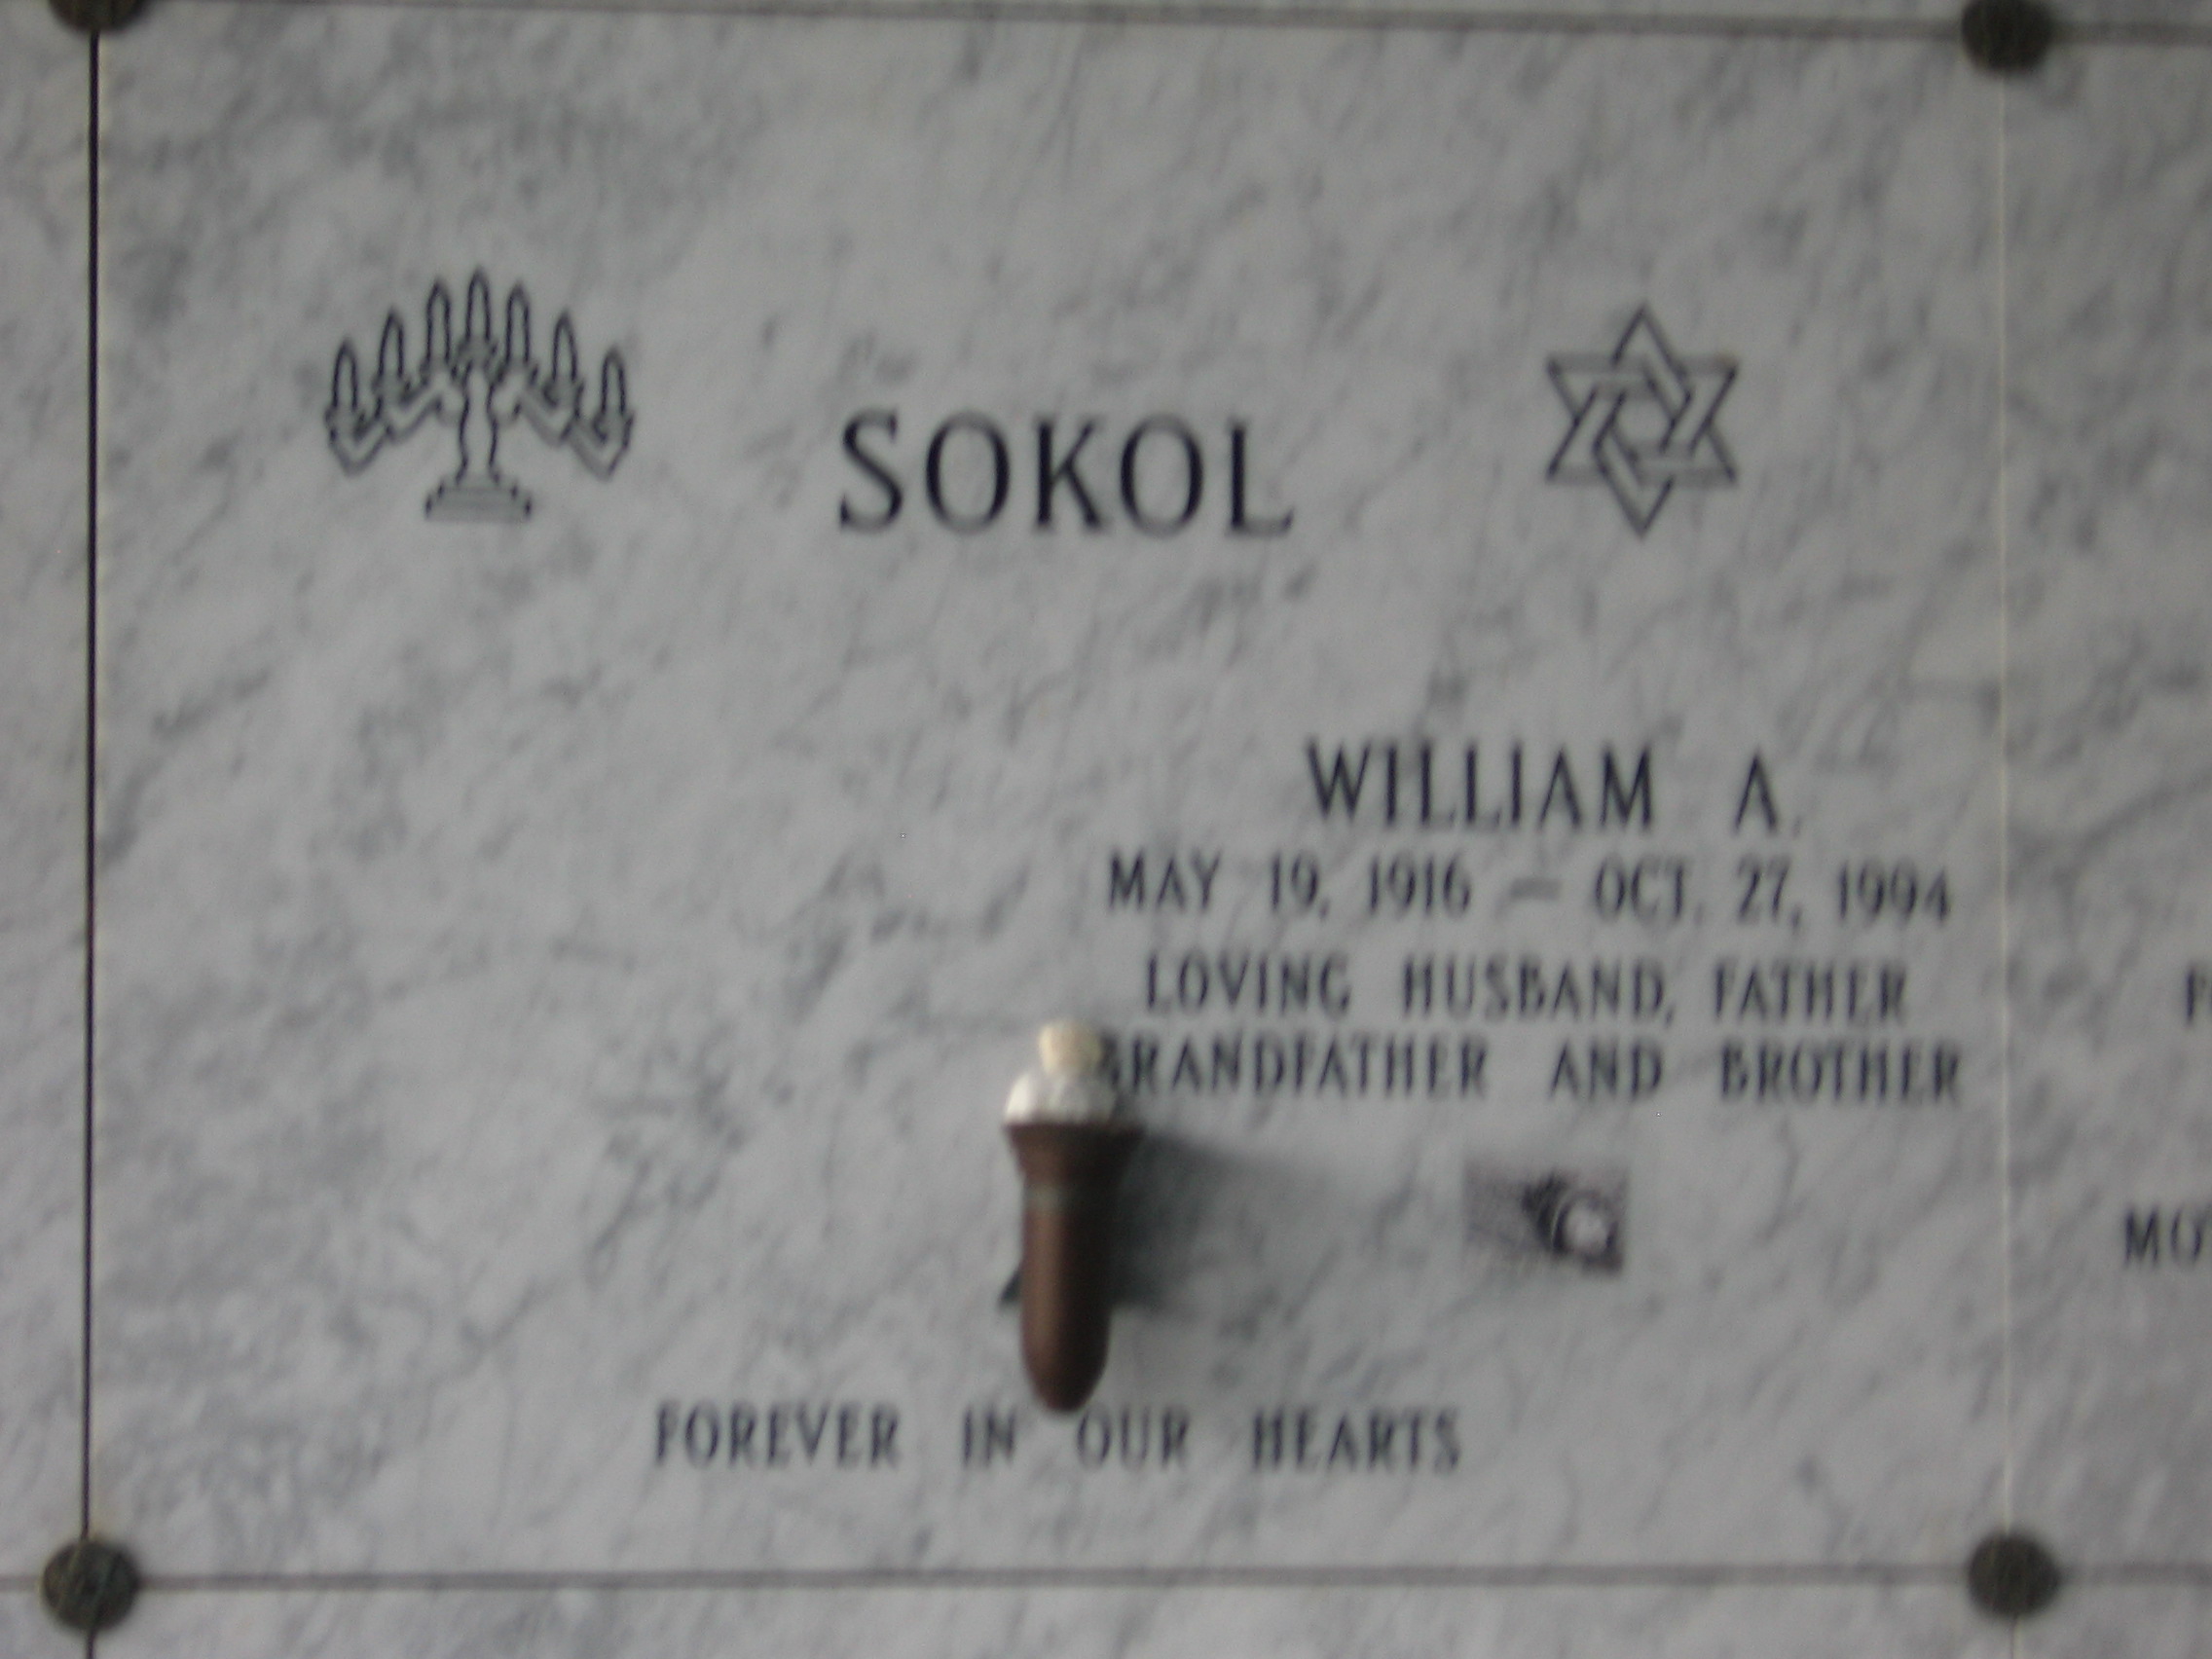 William A Sokol